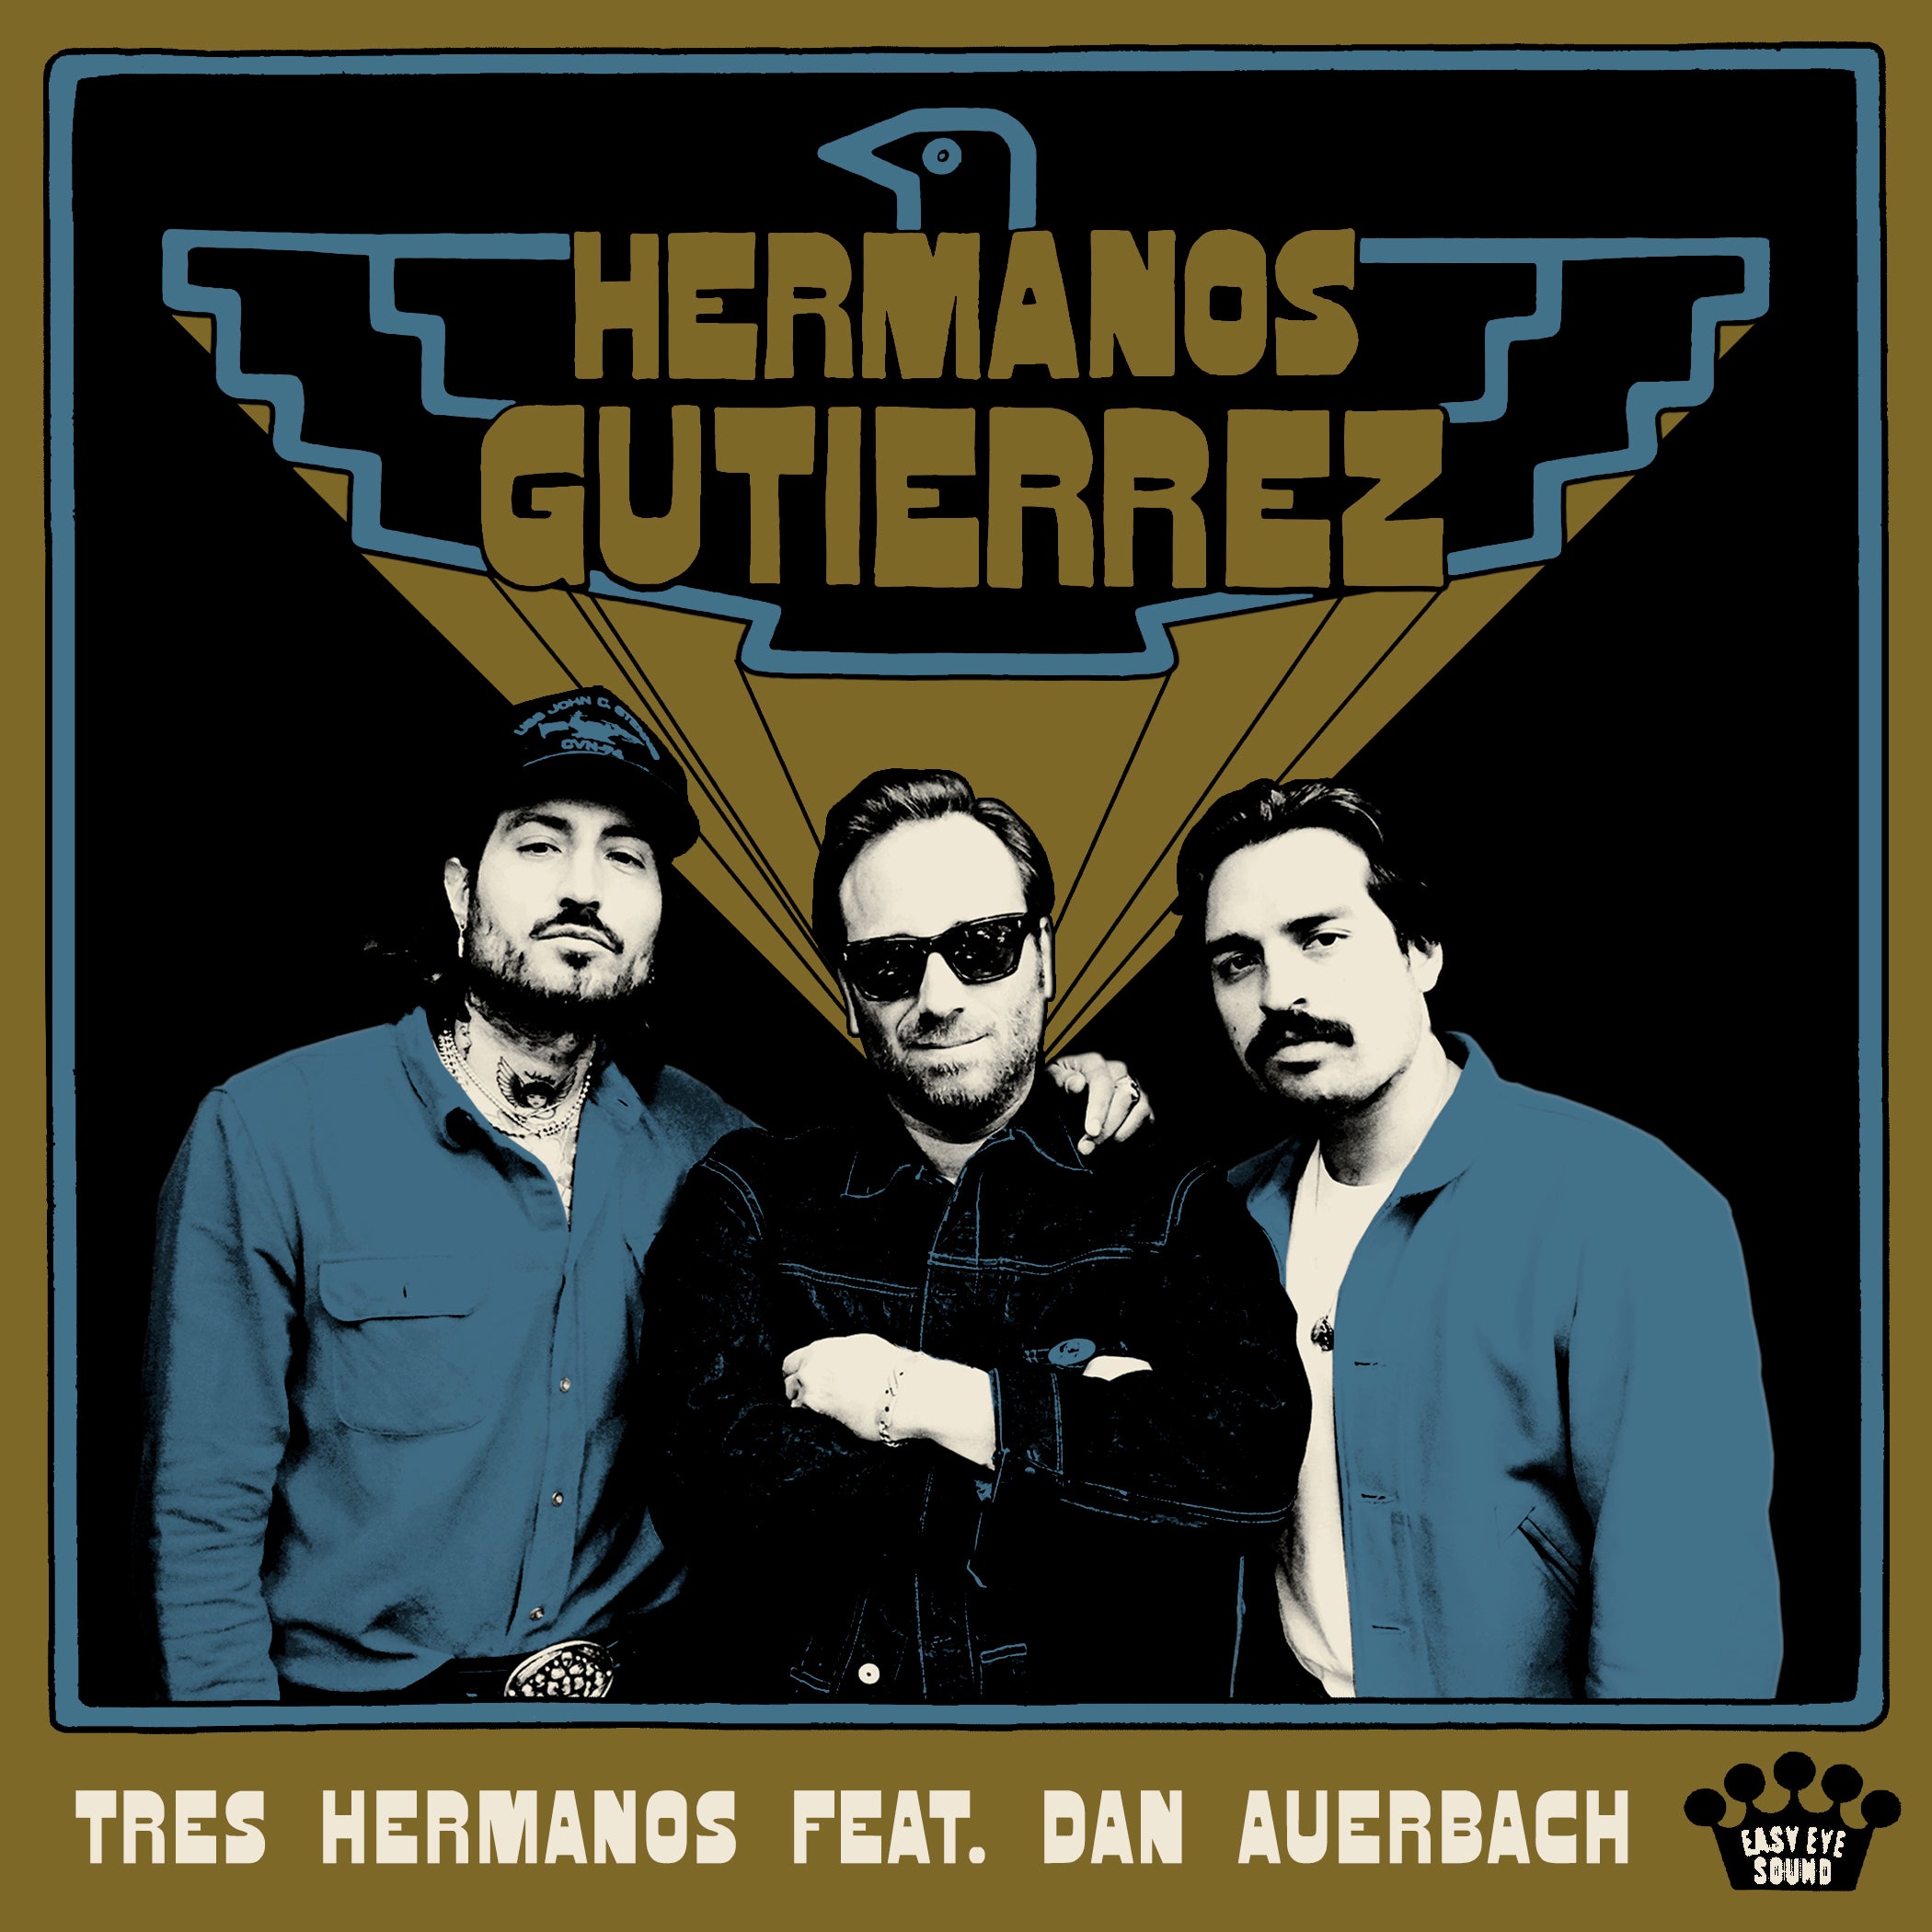 NEW SINGLE “TRES HERMANOS” FROM HERMANOS GUTIÉRREZ FEATURES DAN AUERBACH